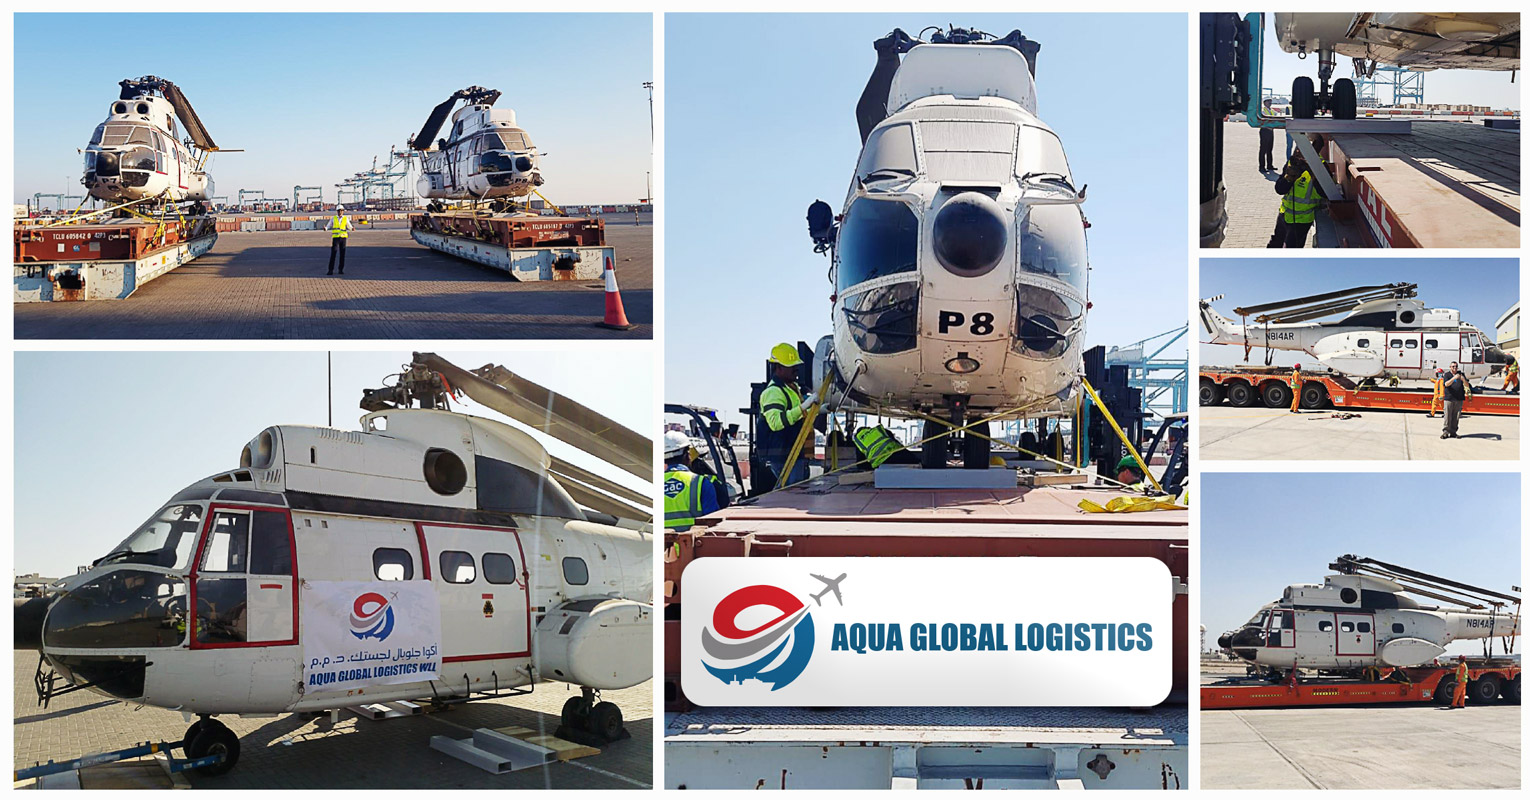 Aqua Global Logistics Bahrain Shipped 2 Units of Puma Helicopters from Bahrain to New Zealand